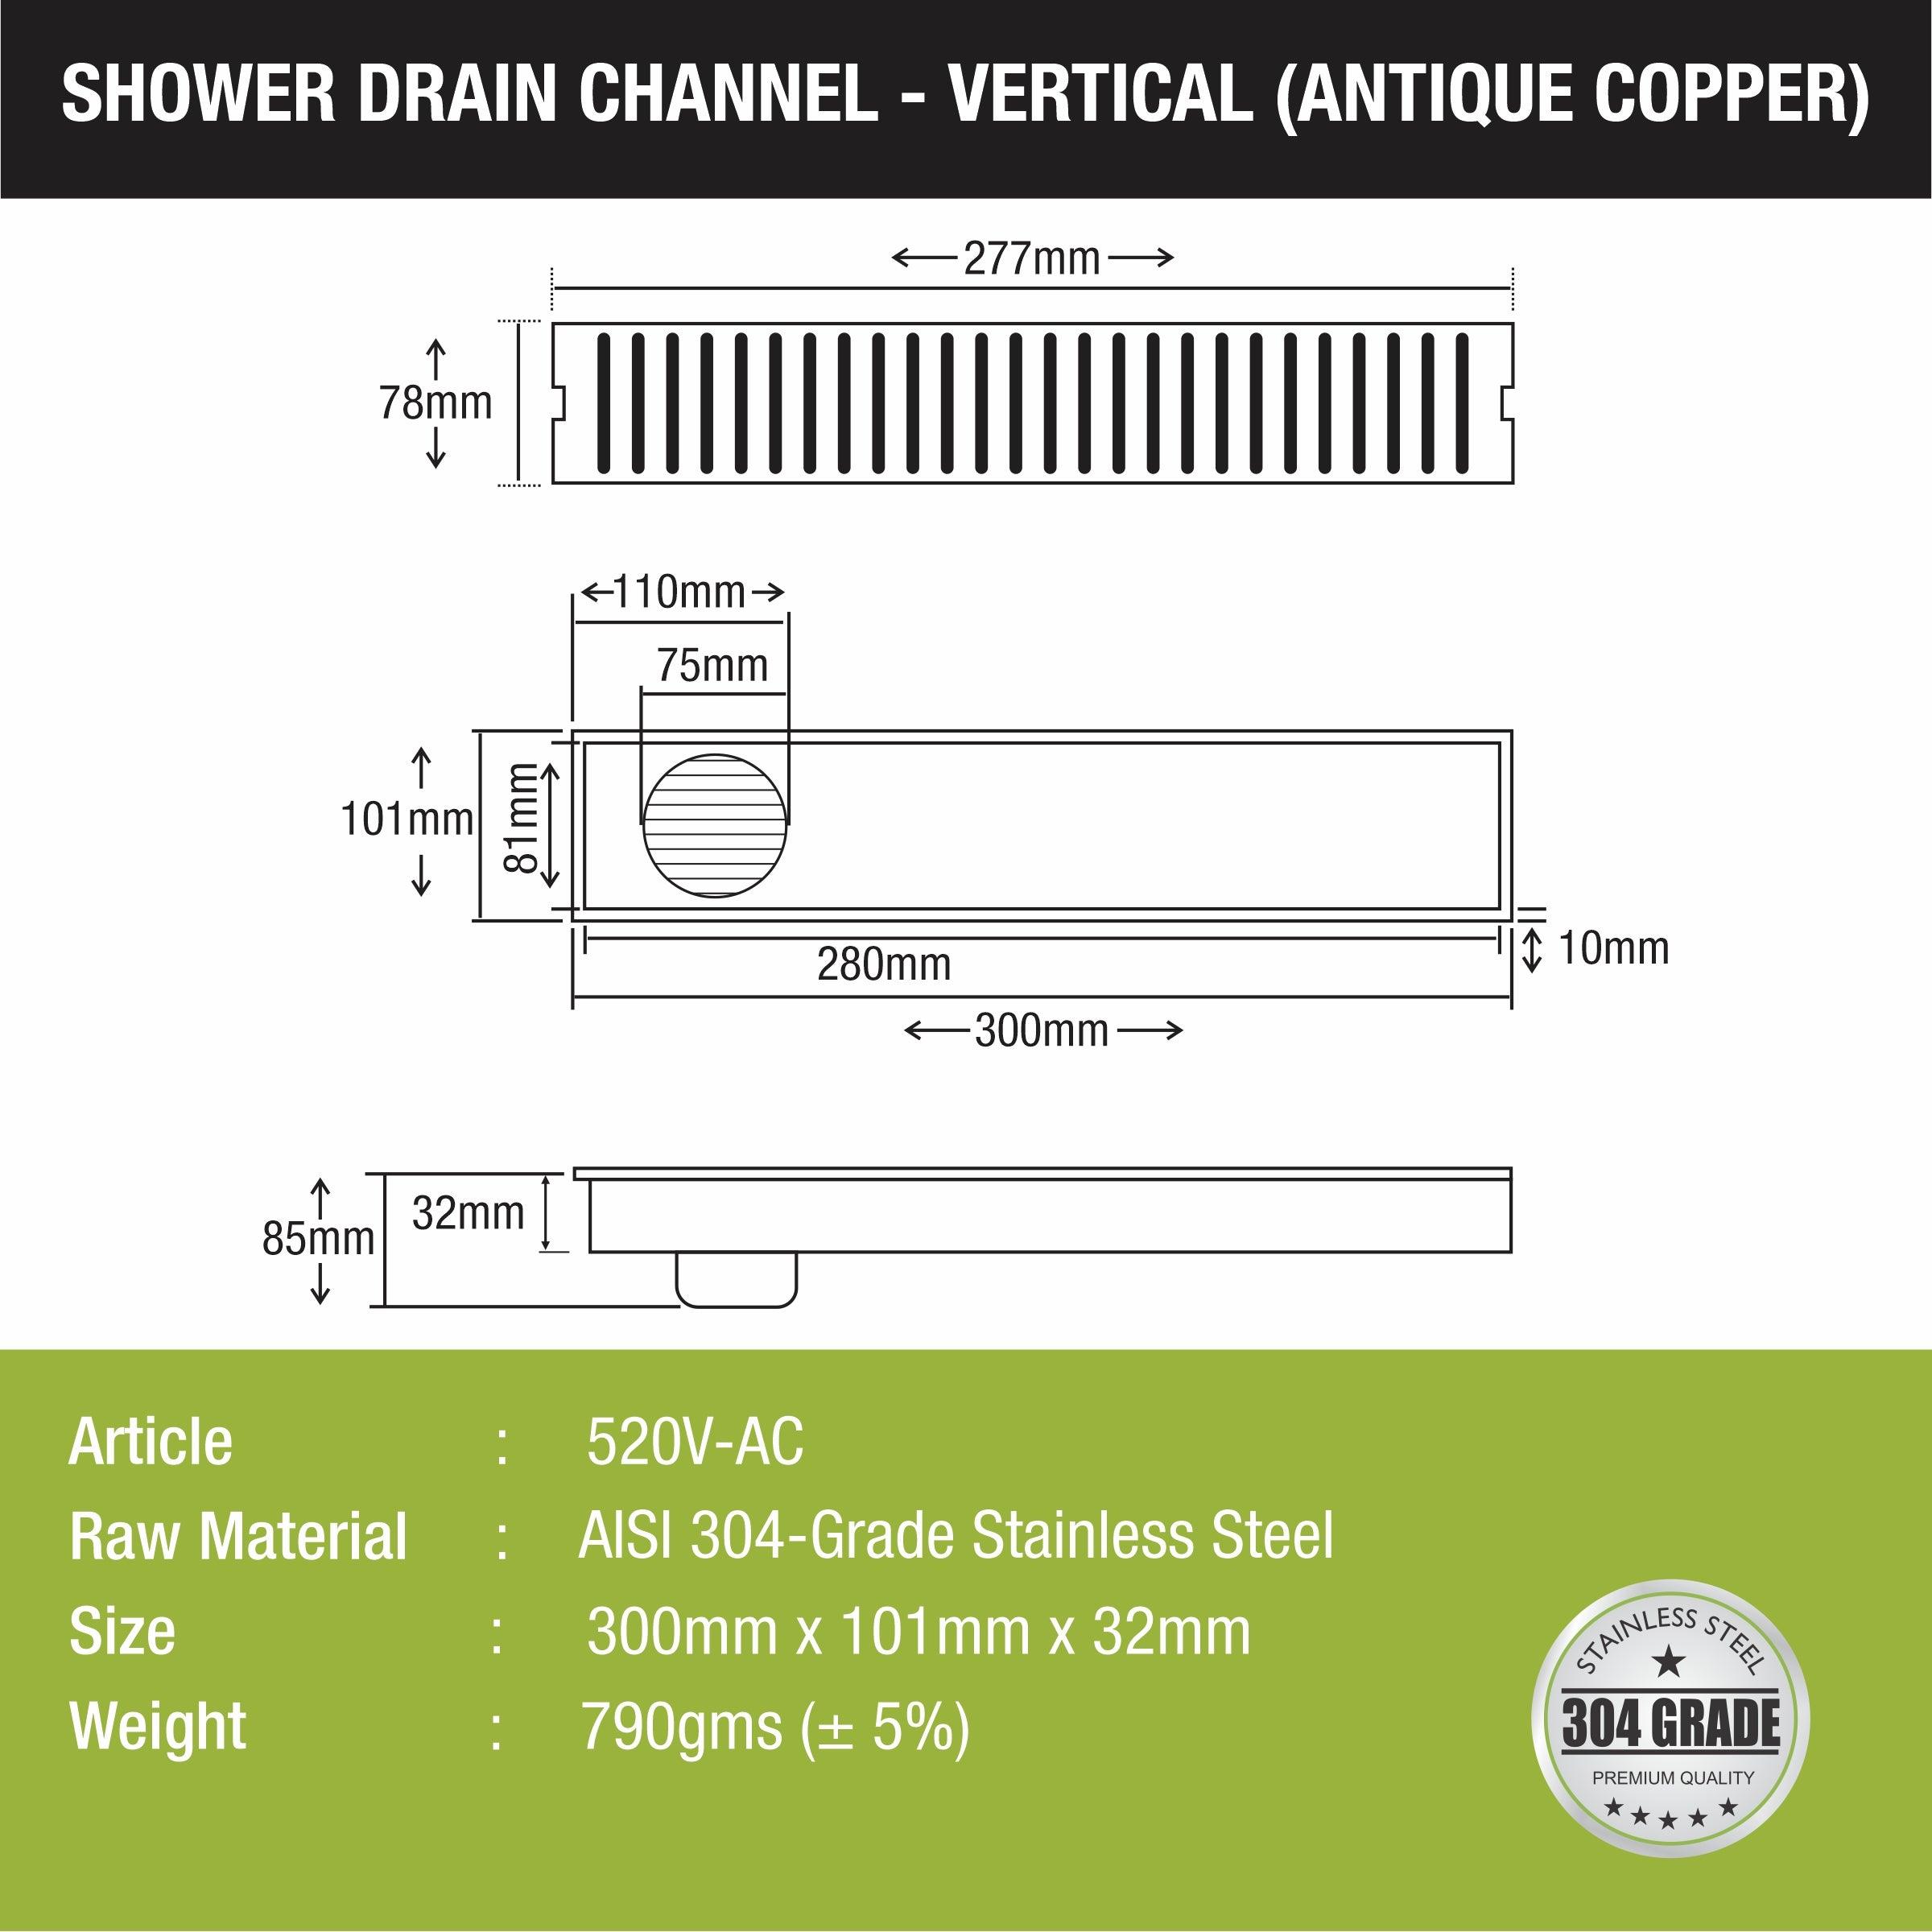 Vertical Shower Drain Channel - Antique Copper (12 x 4 Inches) - LIPKA - Lipka Home